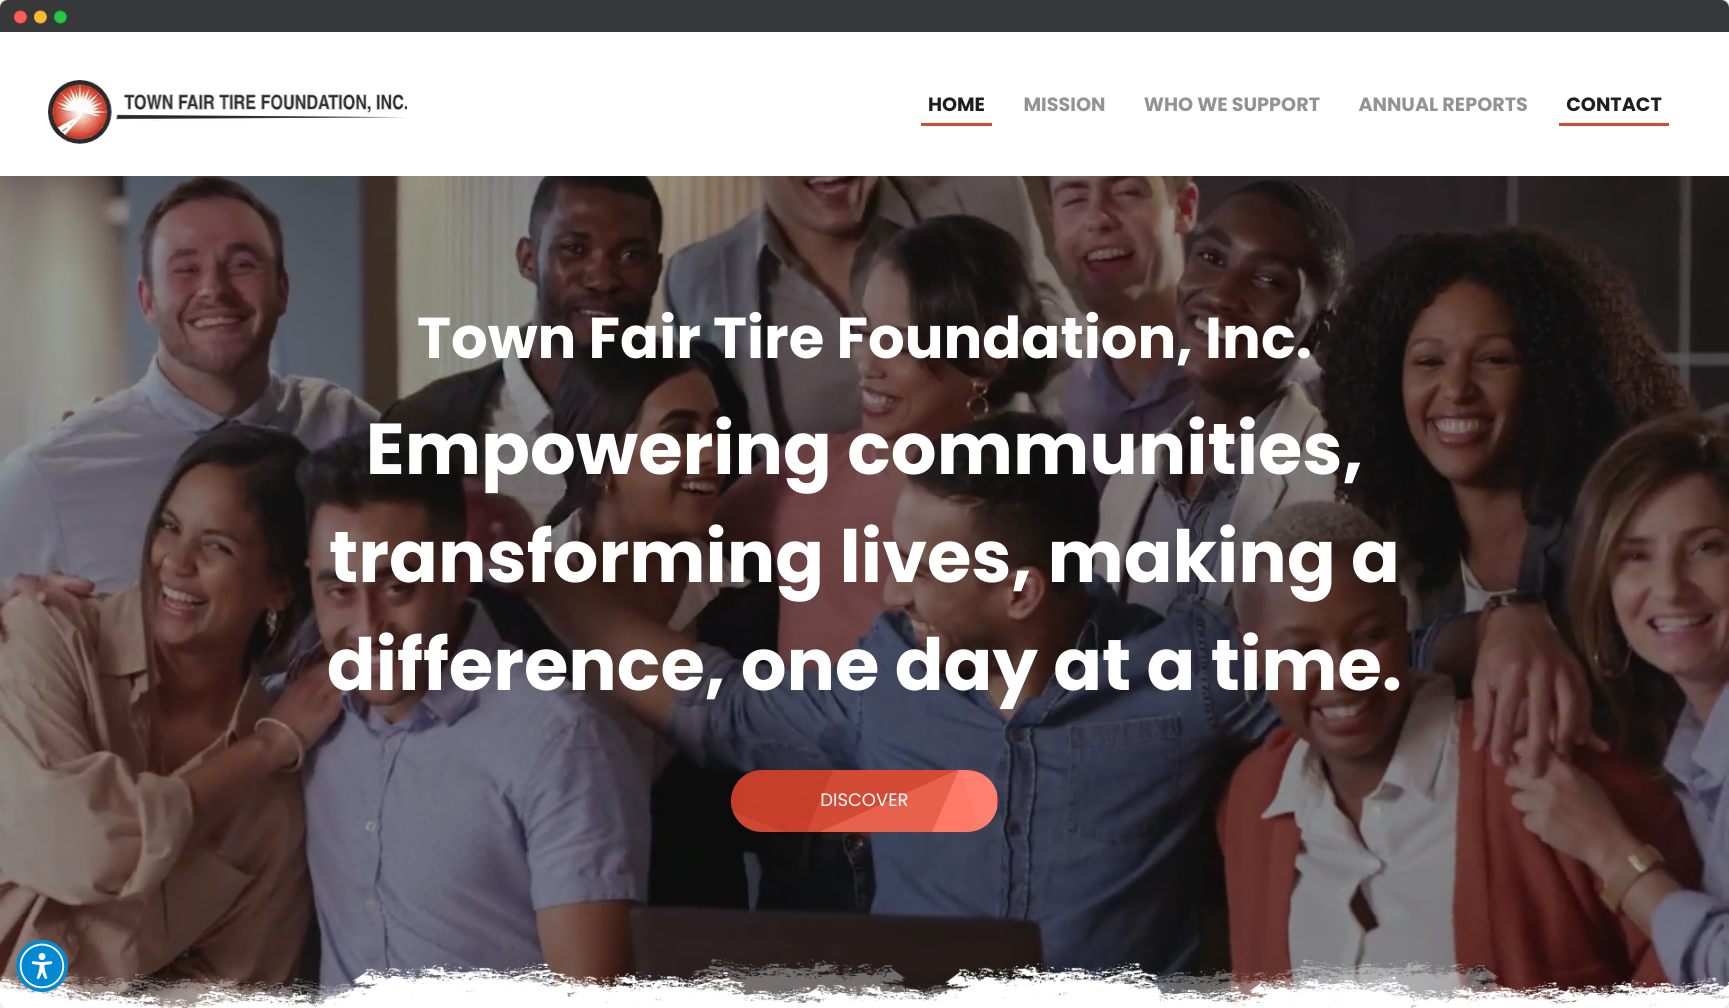 Town Fair Tire Foundation